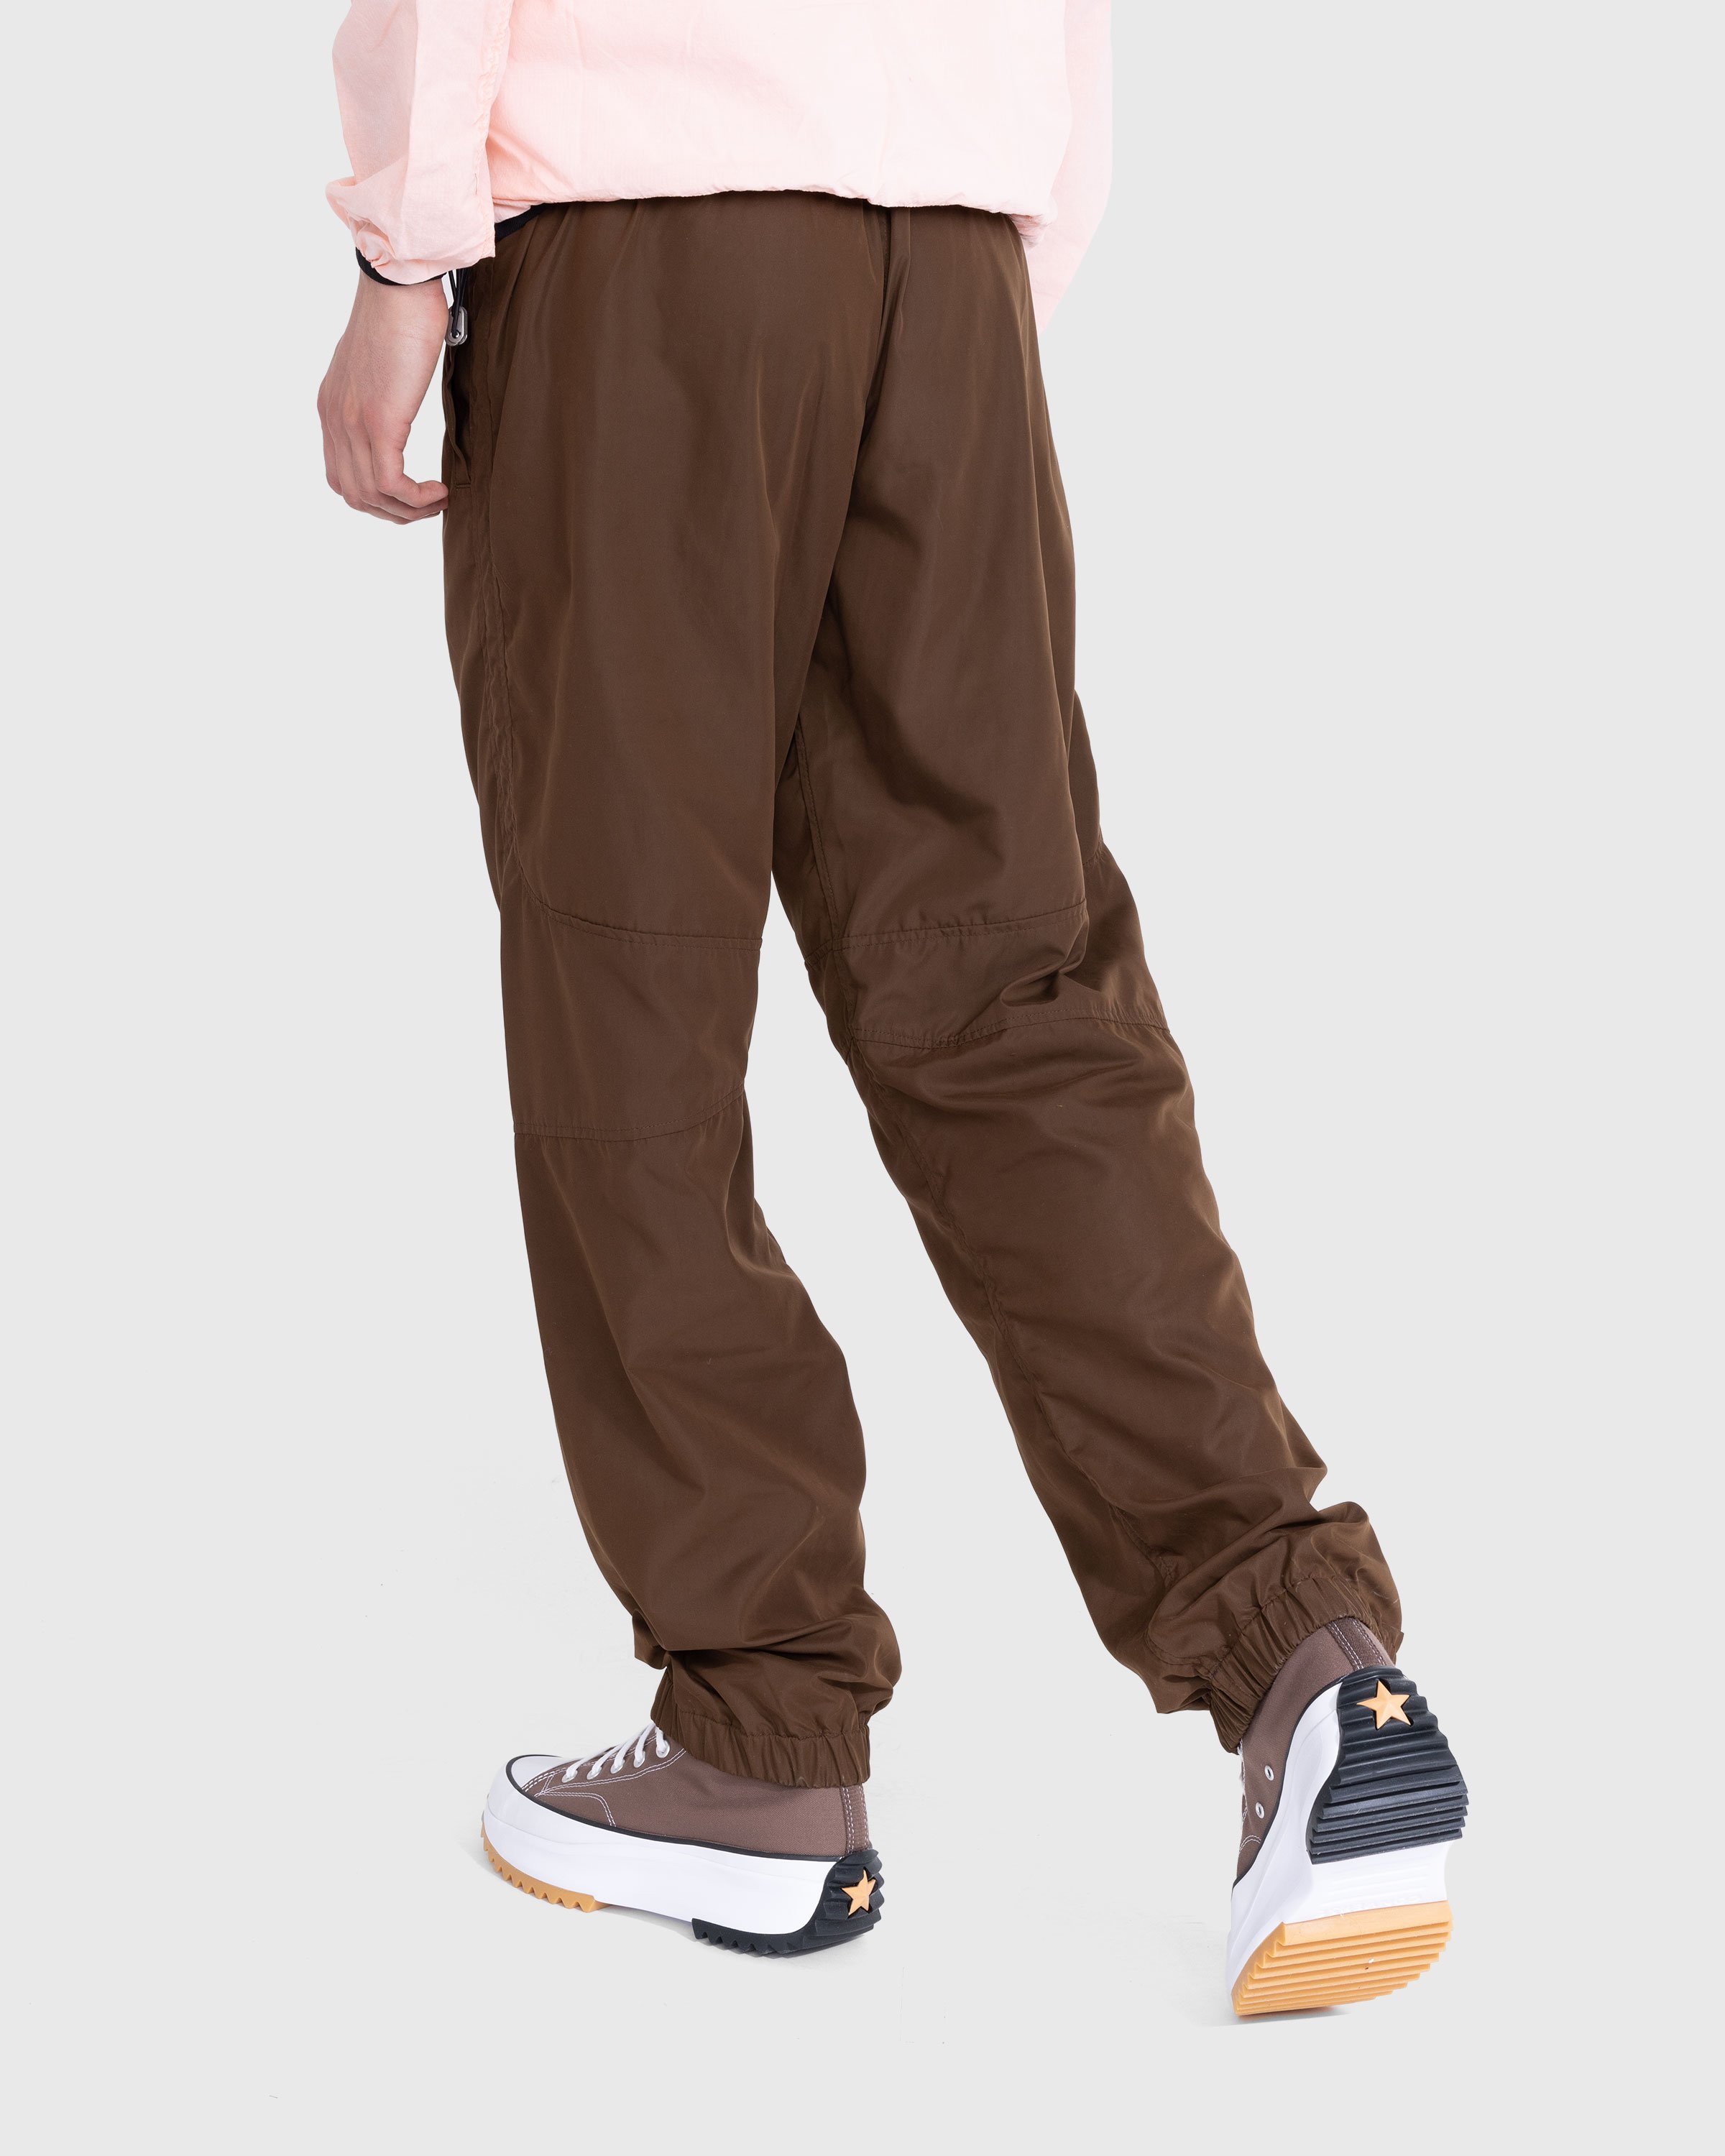 RANRA - Is Pants Brown - Clothing - Brown - Image 3